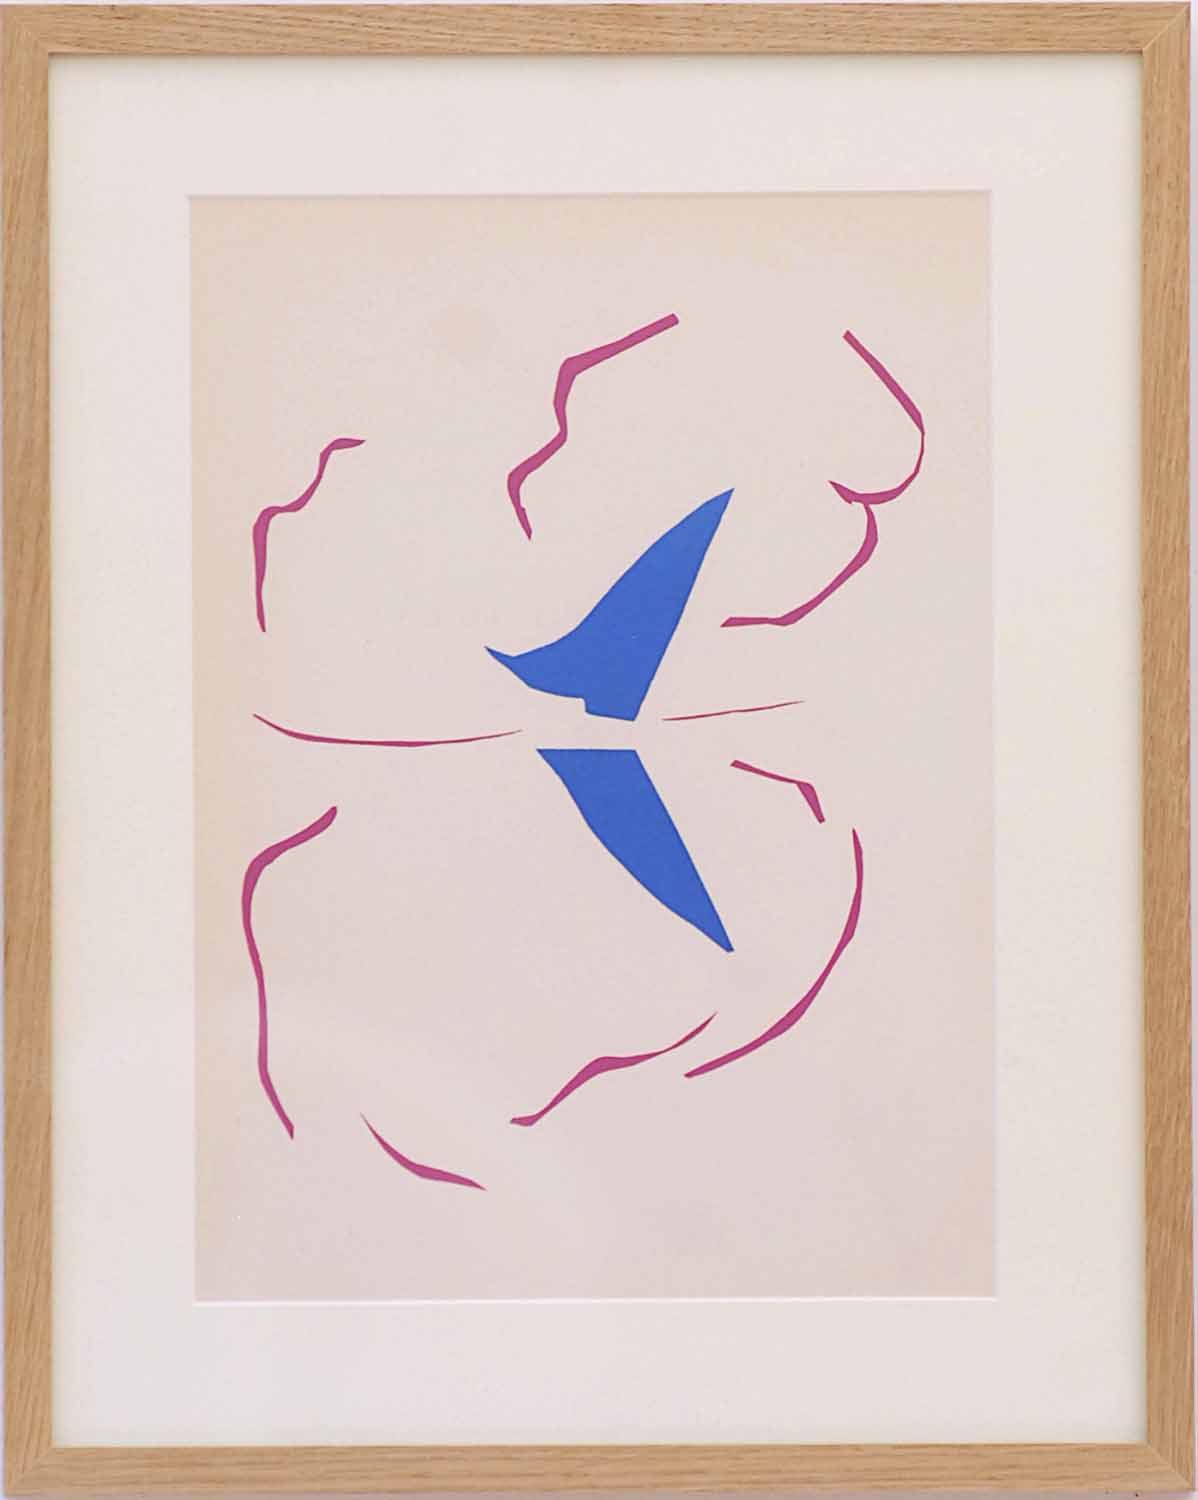 HENRI MATISSE 'Bateau', original lithograph after Matisse's cutouts, edition 1954 Mourlot,